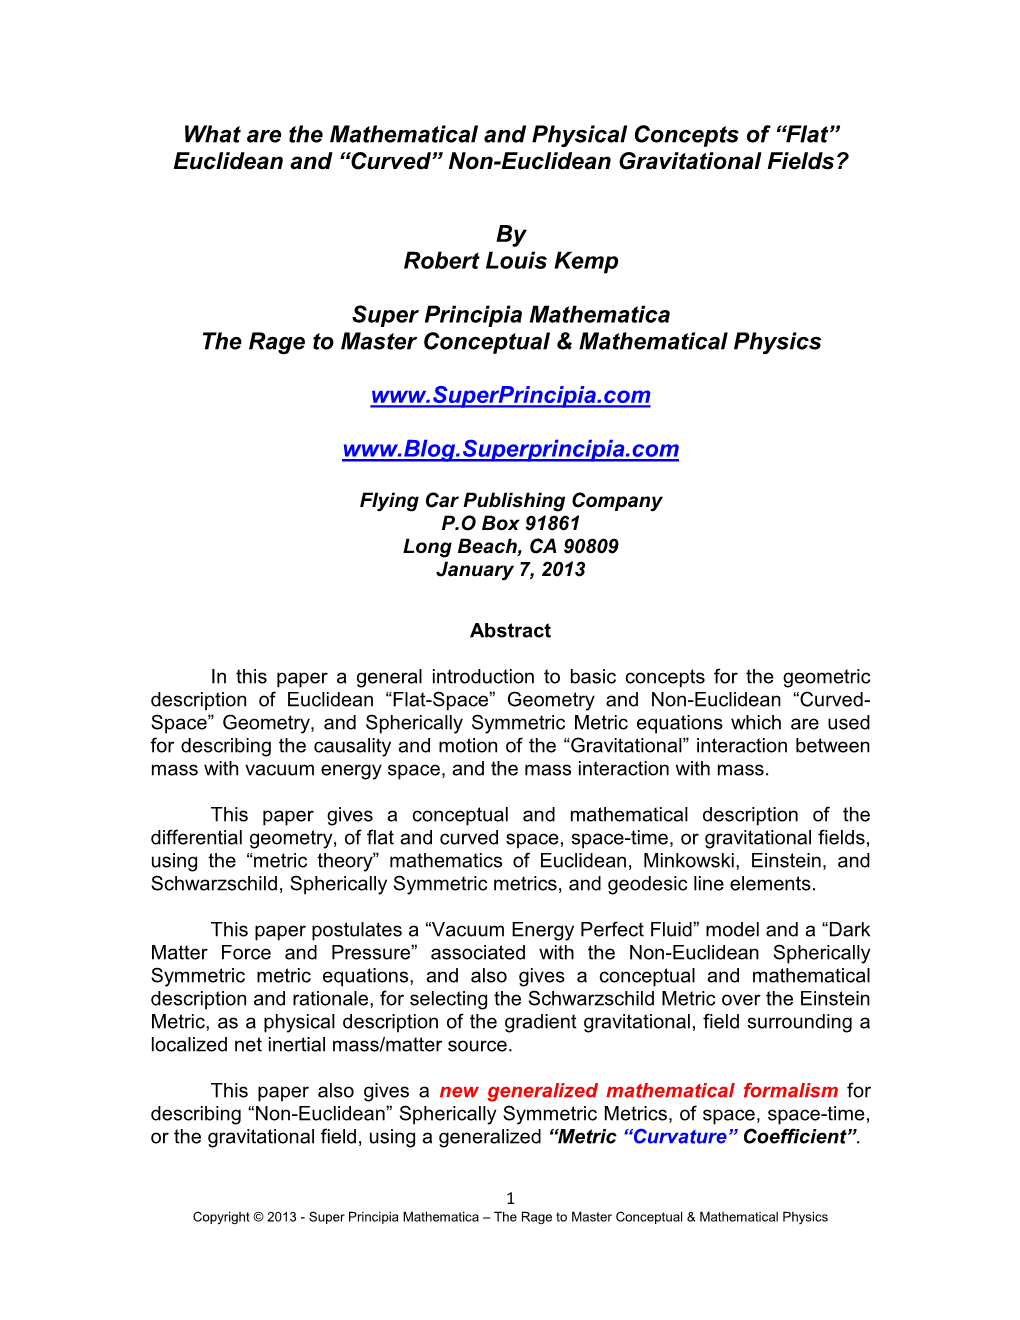 Euclidean and “Curved” Non-Euclidean Gravitational Fields?